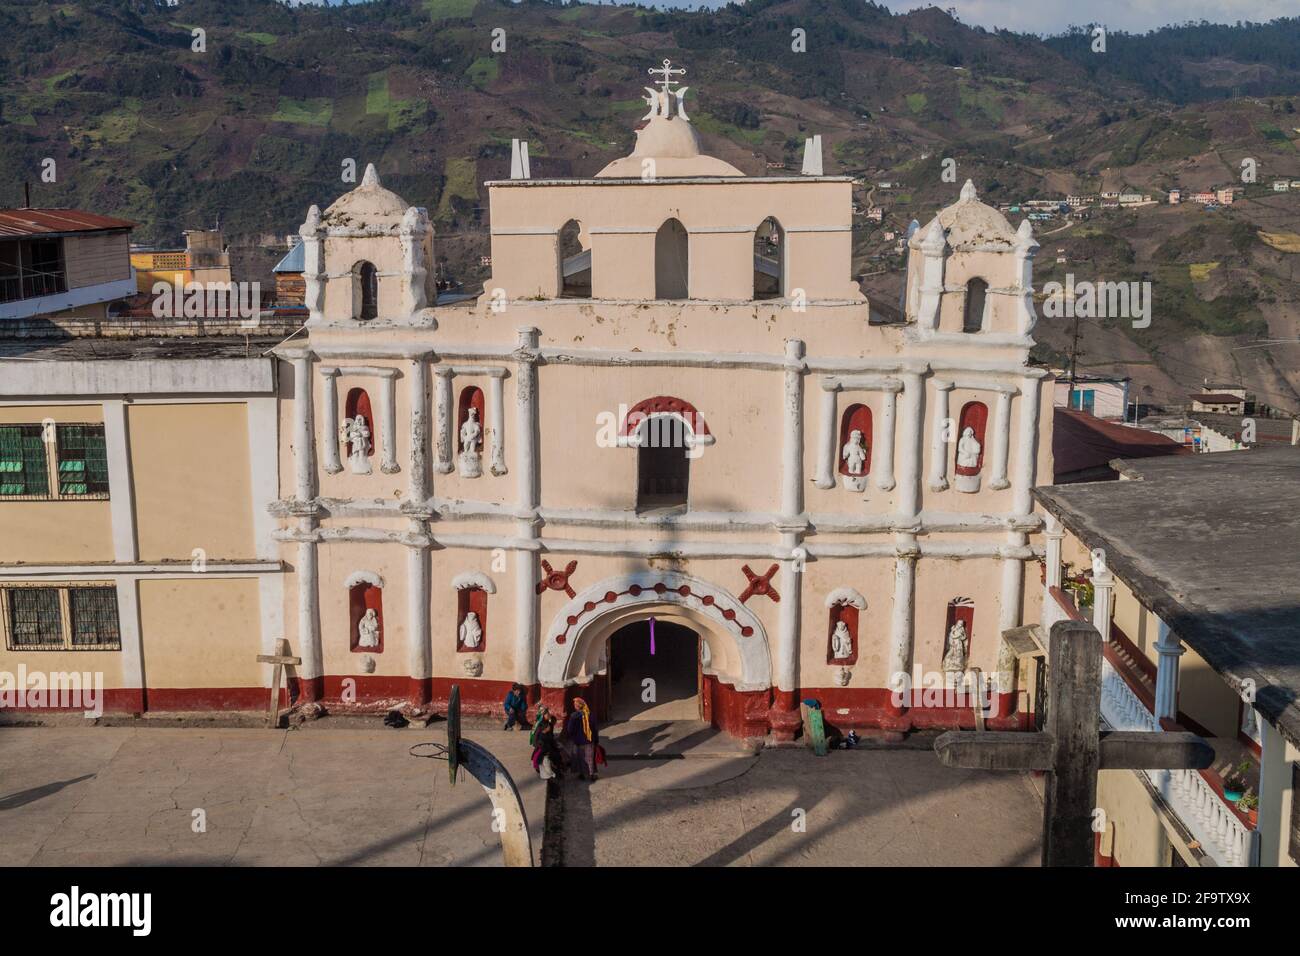 SAN MATEO IXTATAN, GUATEMALA, MARCH 18, 2016: View of a church in San Mateo Ixtatan village. Stock Photo